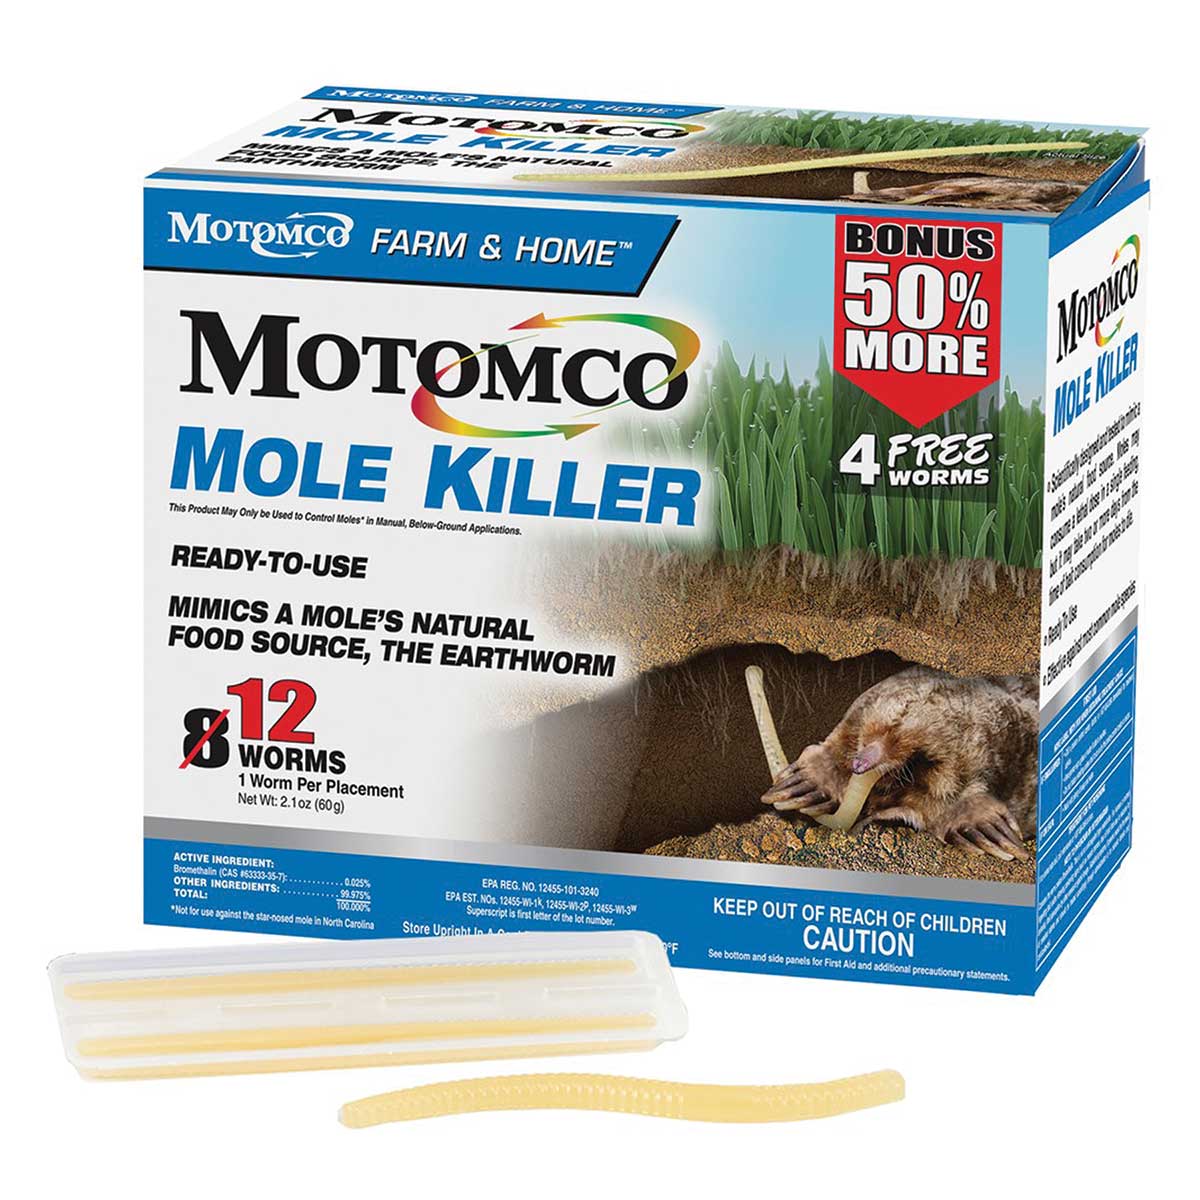 TOMCAT Mole Killer at